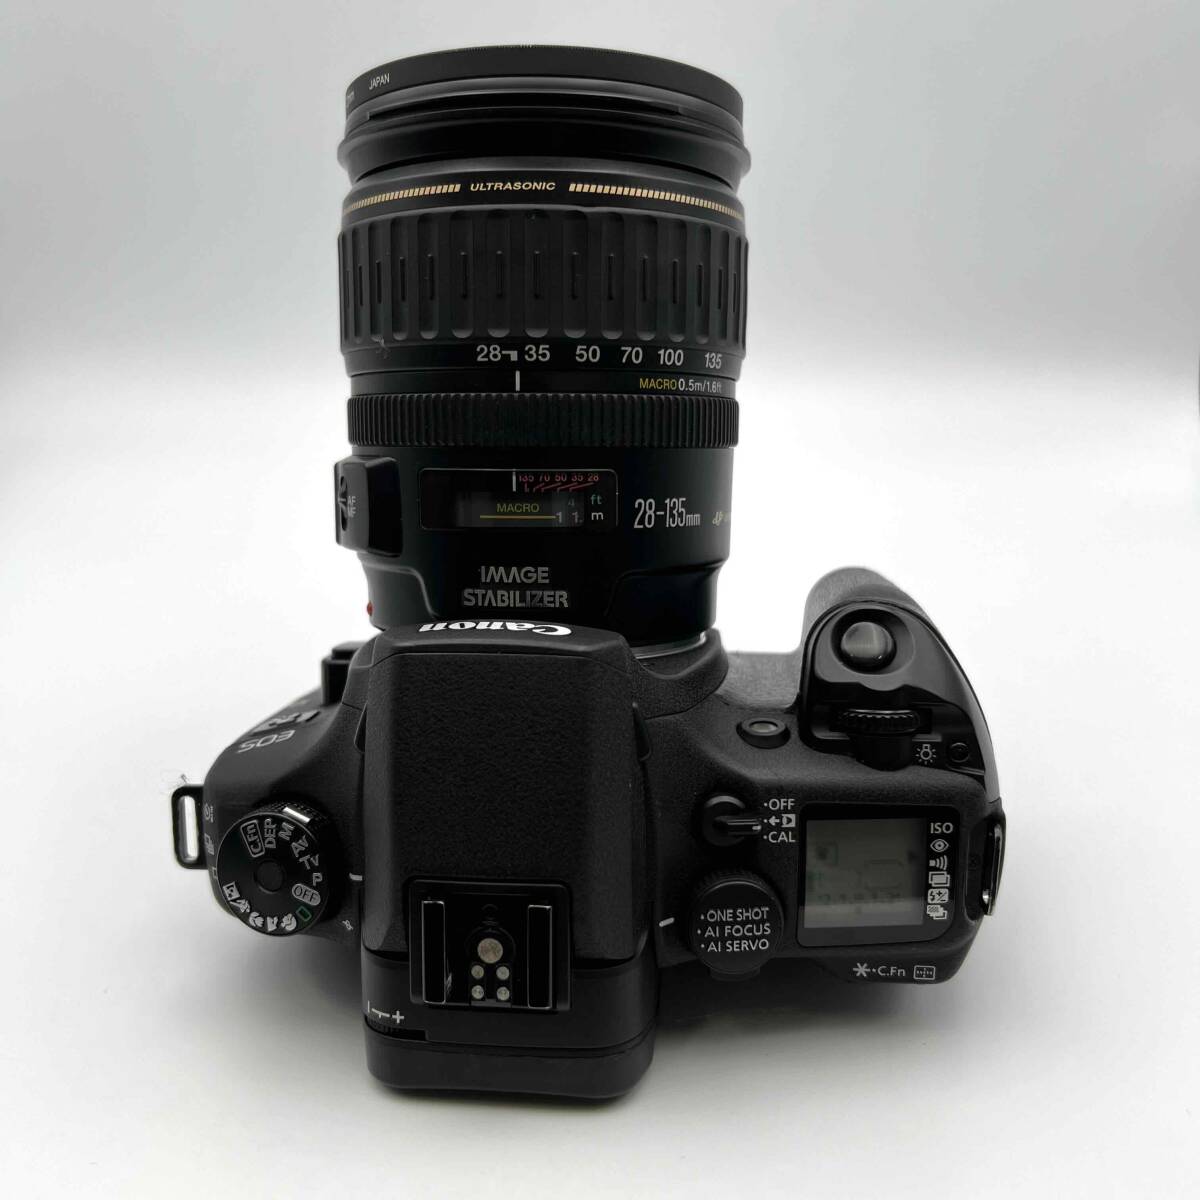 CANON キャノン EOS7s フィルム一眼レフカメラ / CANON ZOOM LENS EF 28-135mm F3.5-5.6 IS / セット販売 動作確認済み 現状品 _画像4